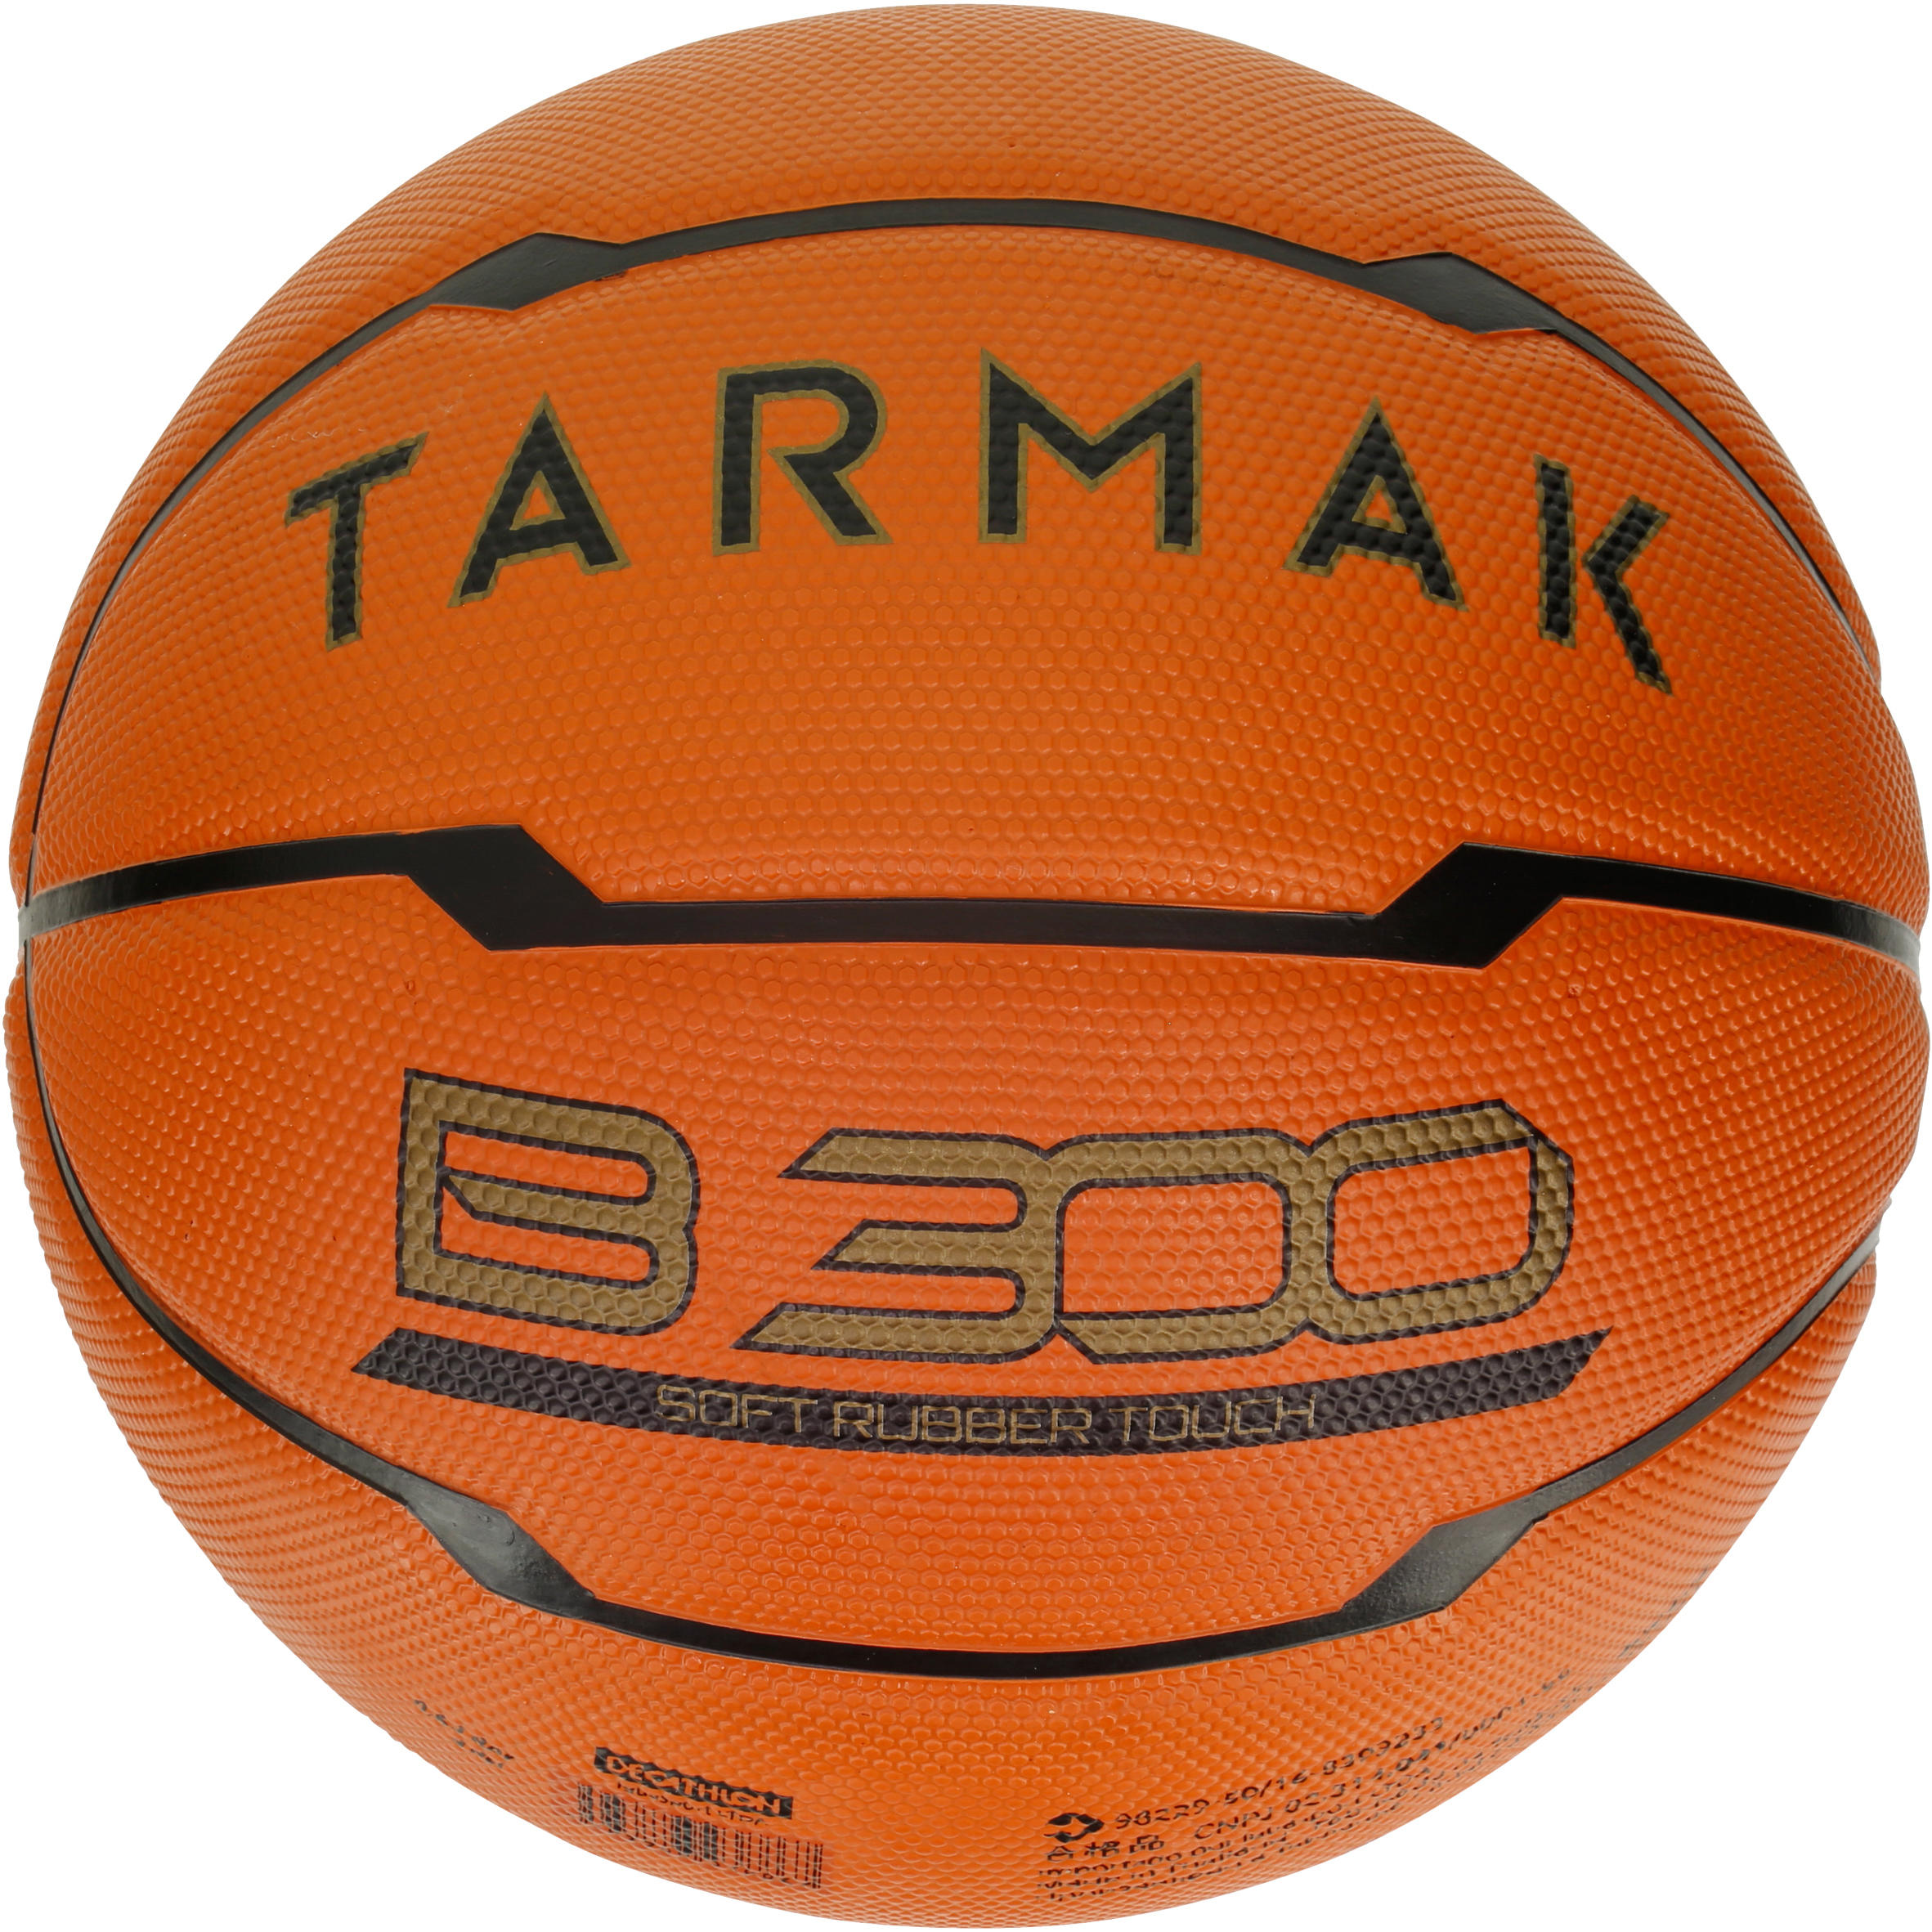 B300 Basketbol Topu - 7 Numara